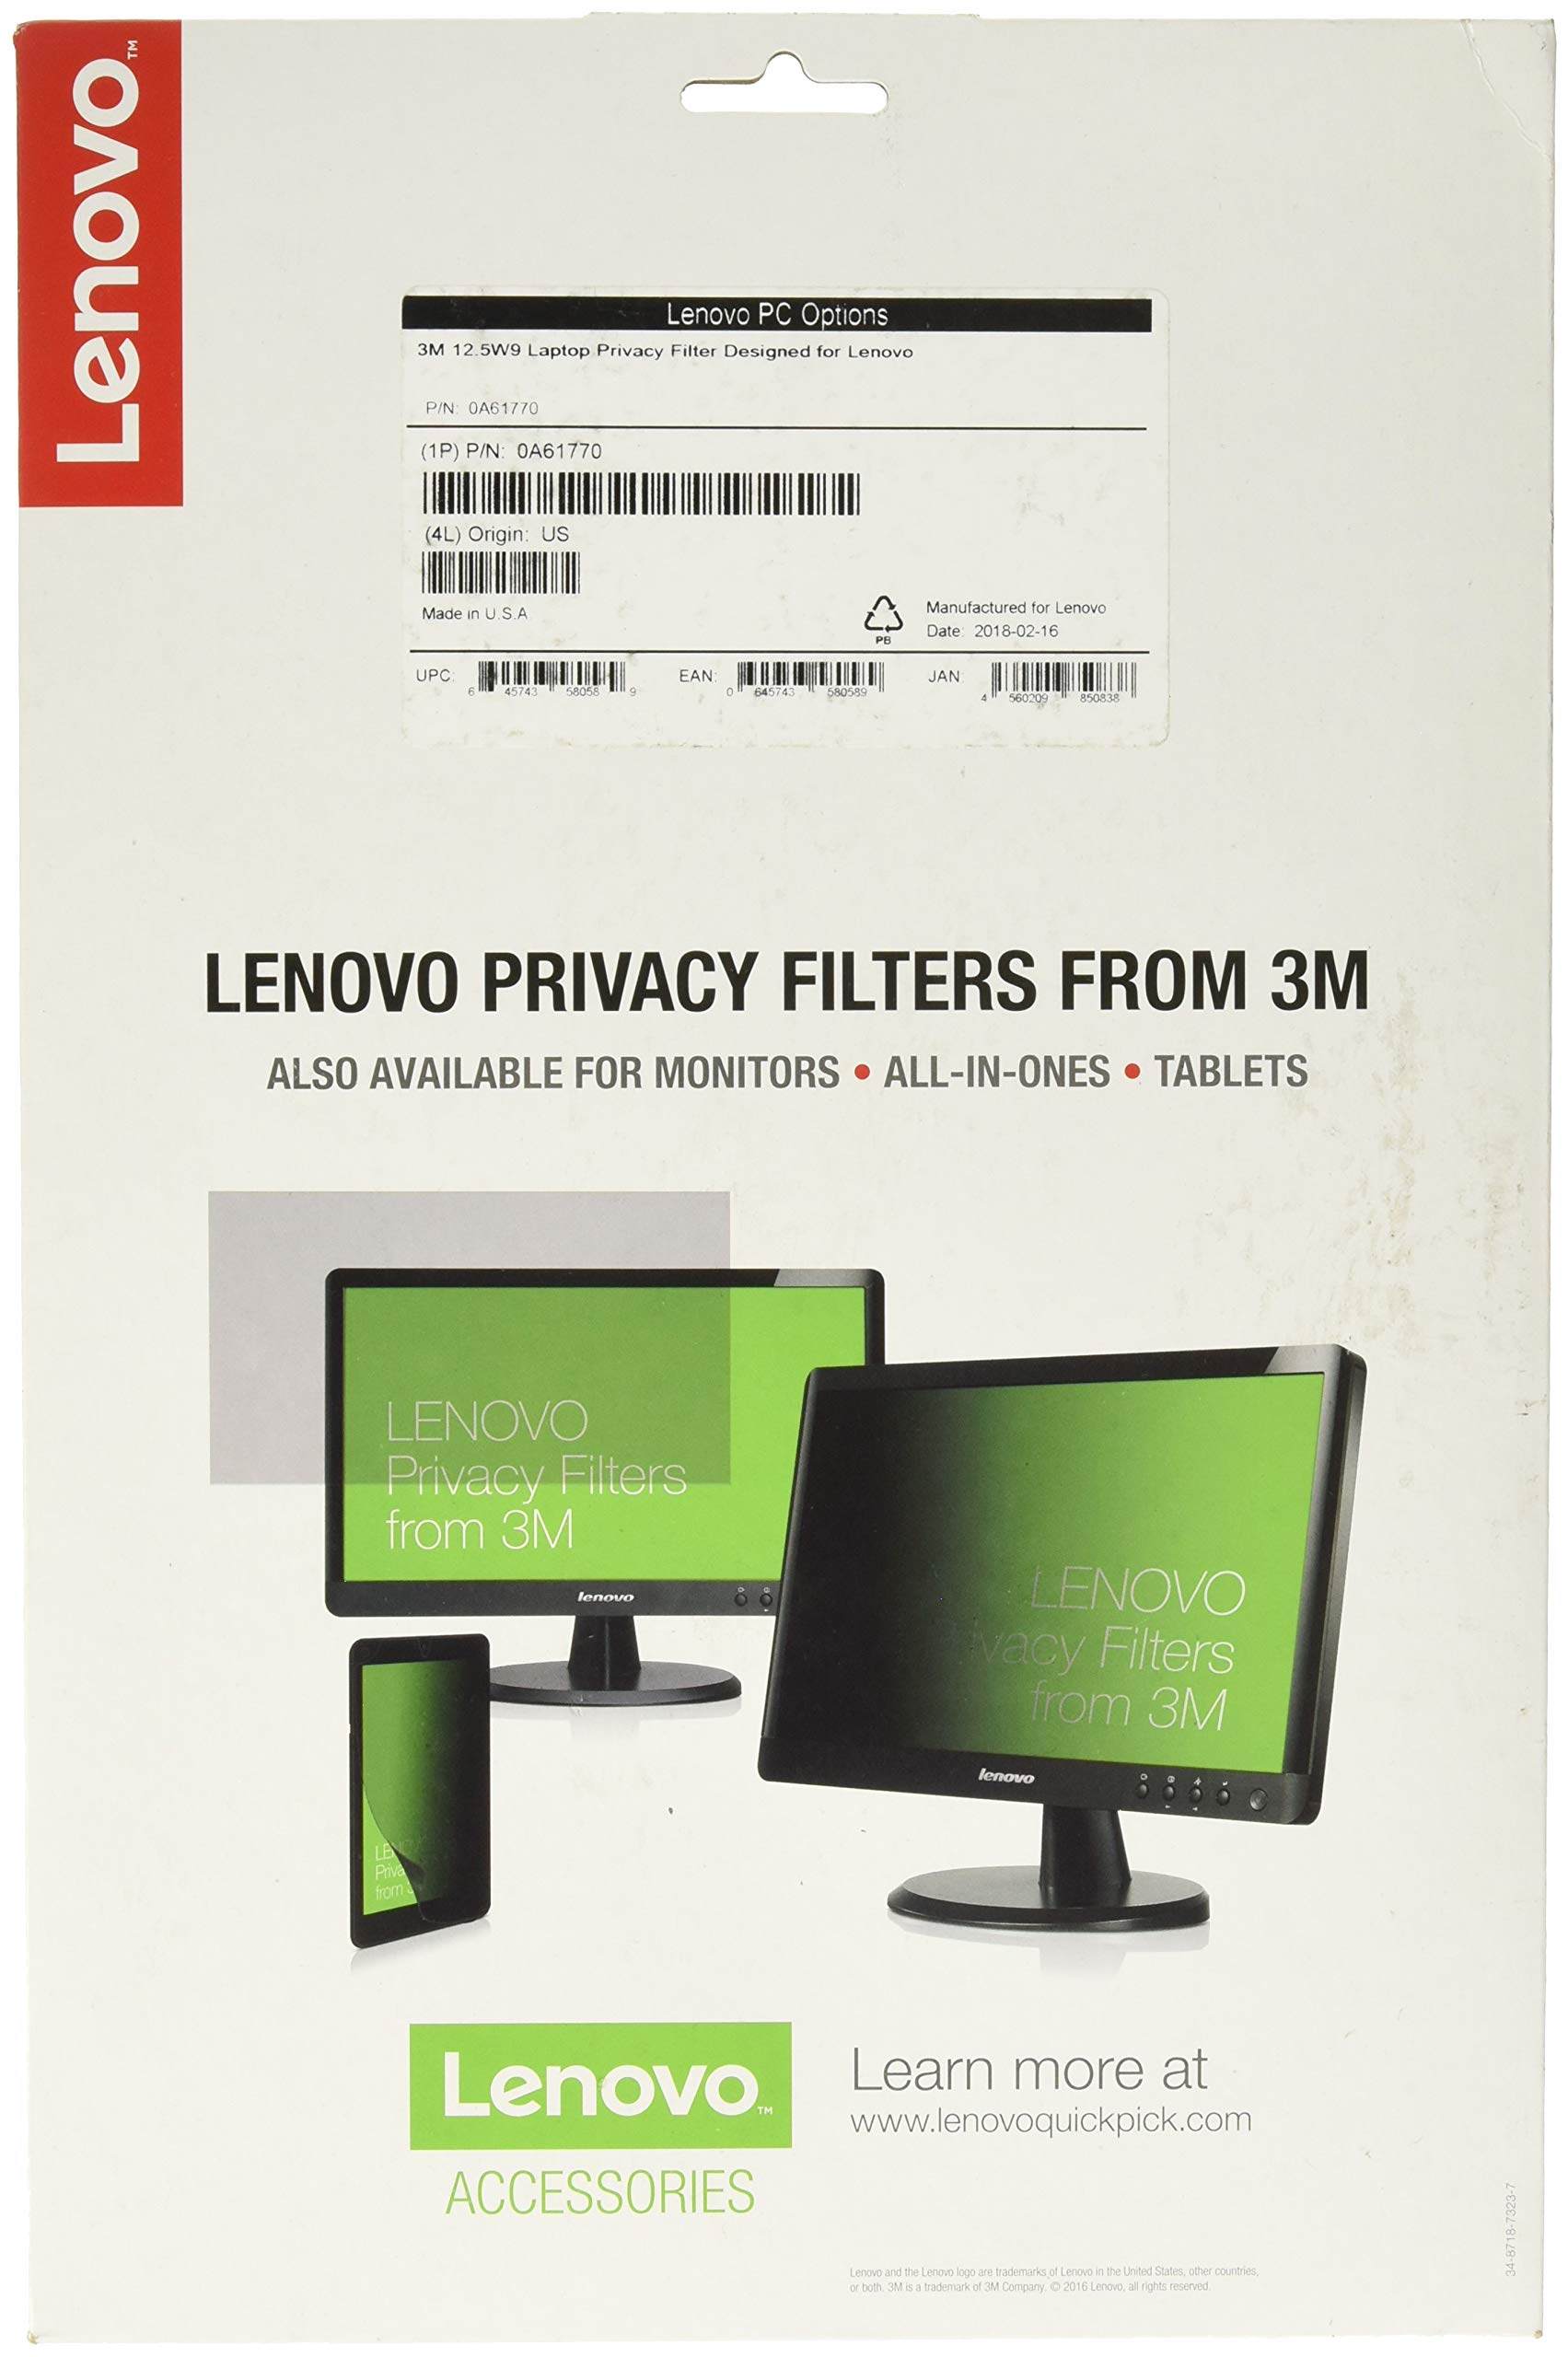 3m 12 5w Privacy Filter Lenovo 0a61770 645743580589